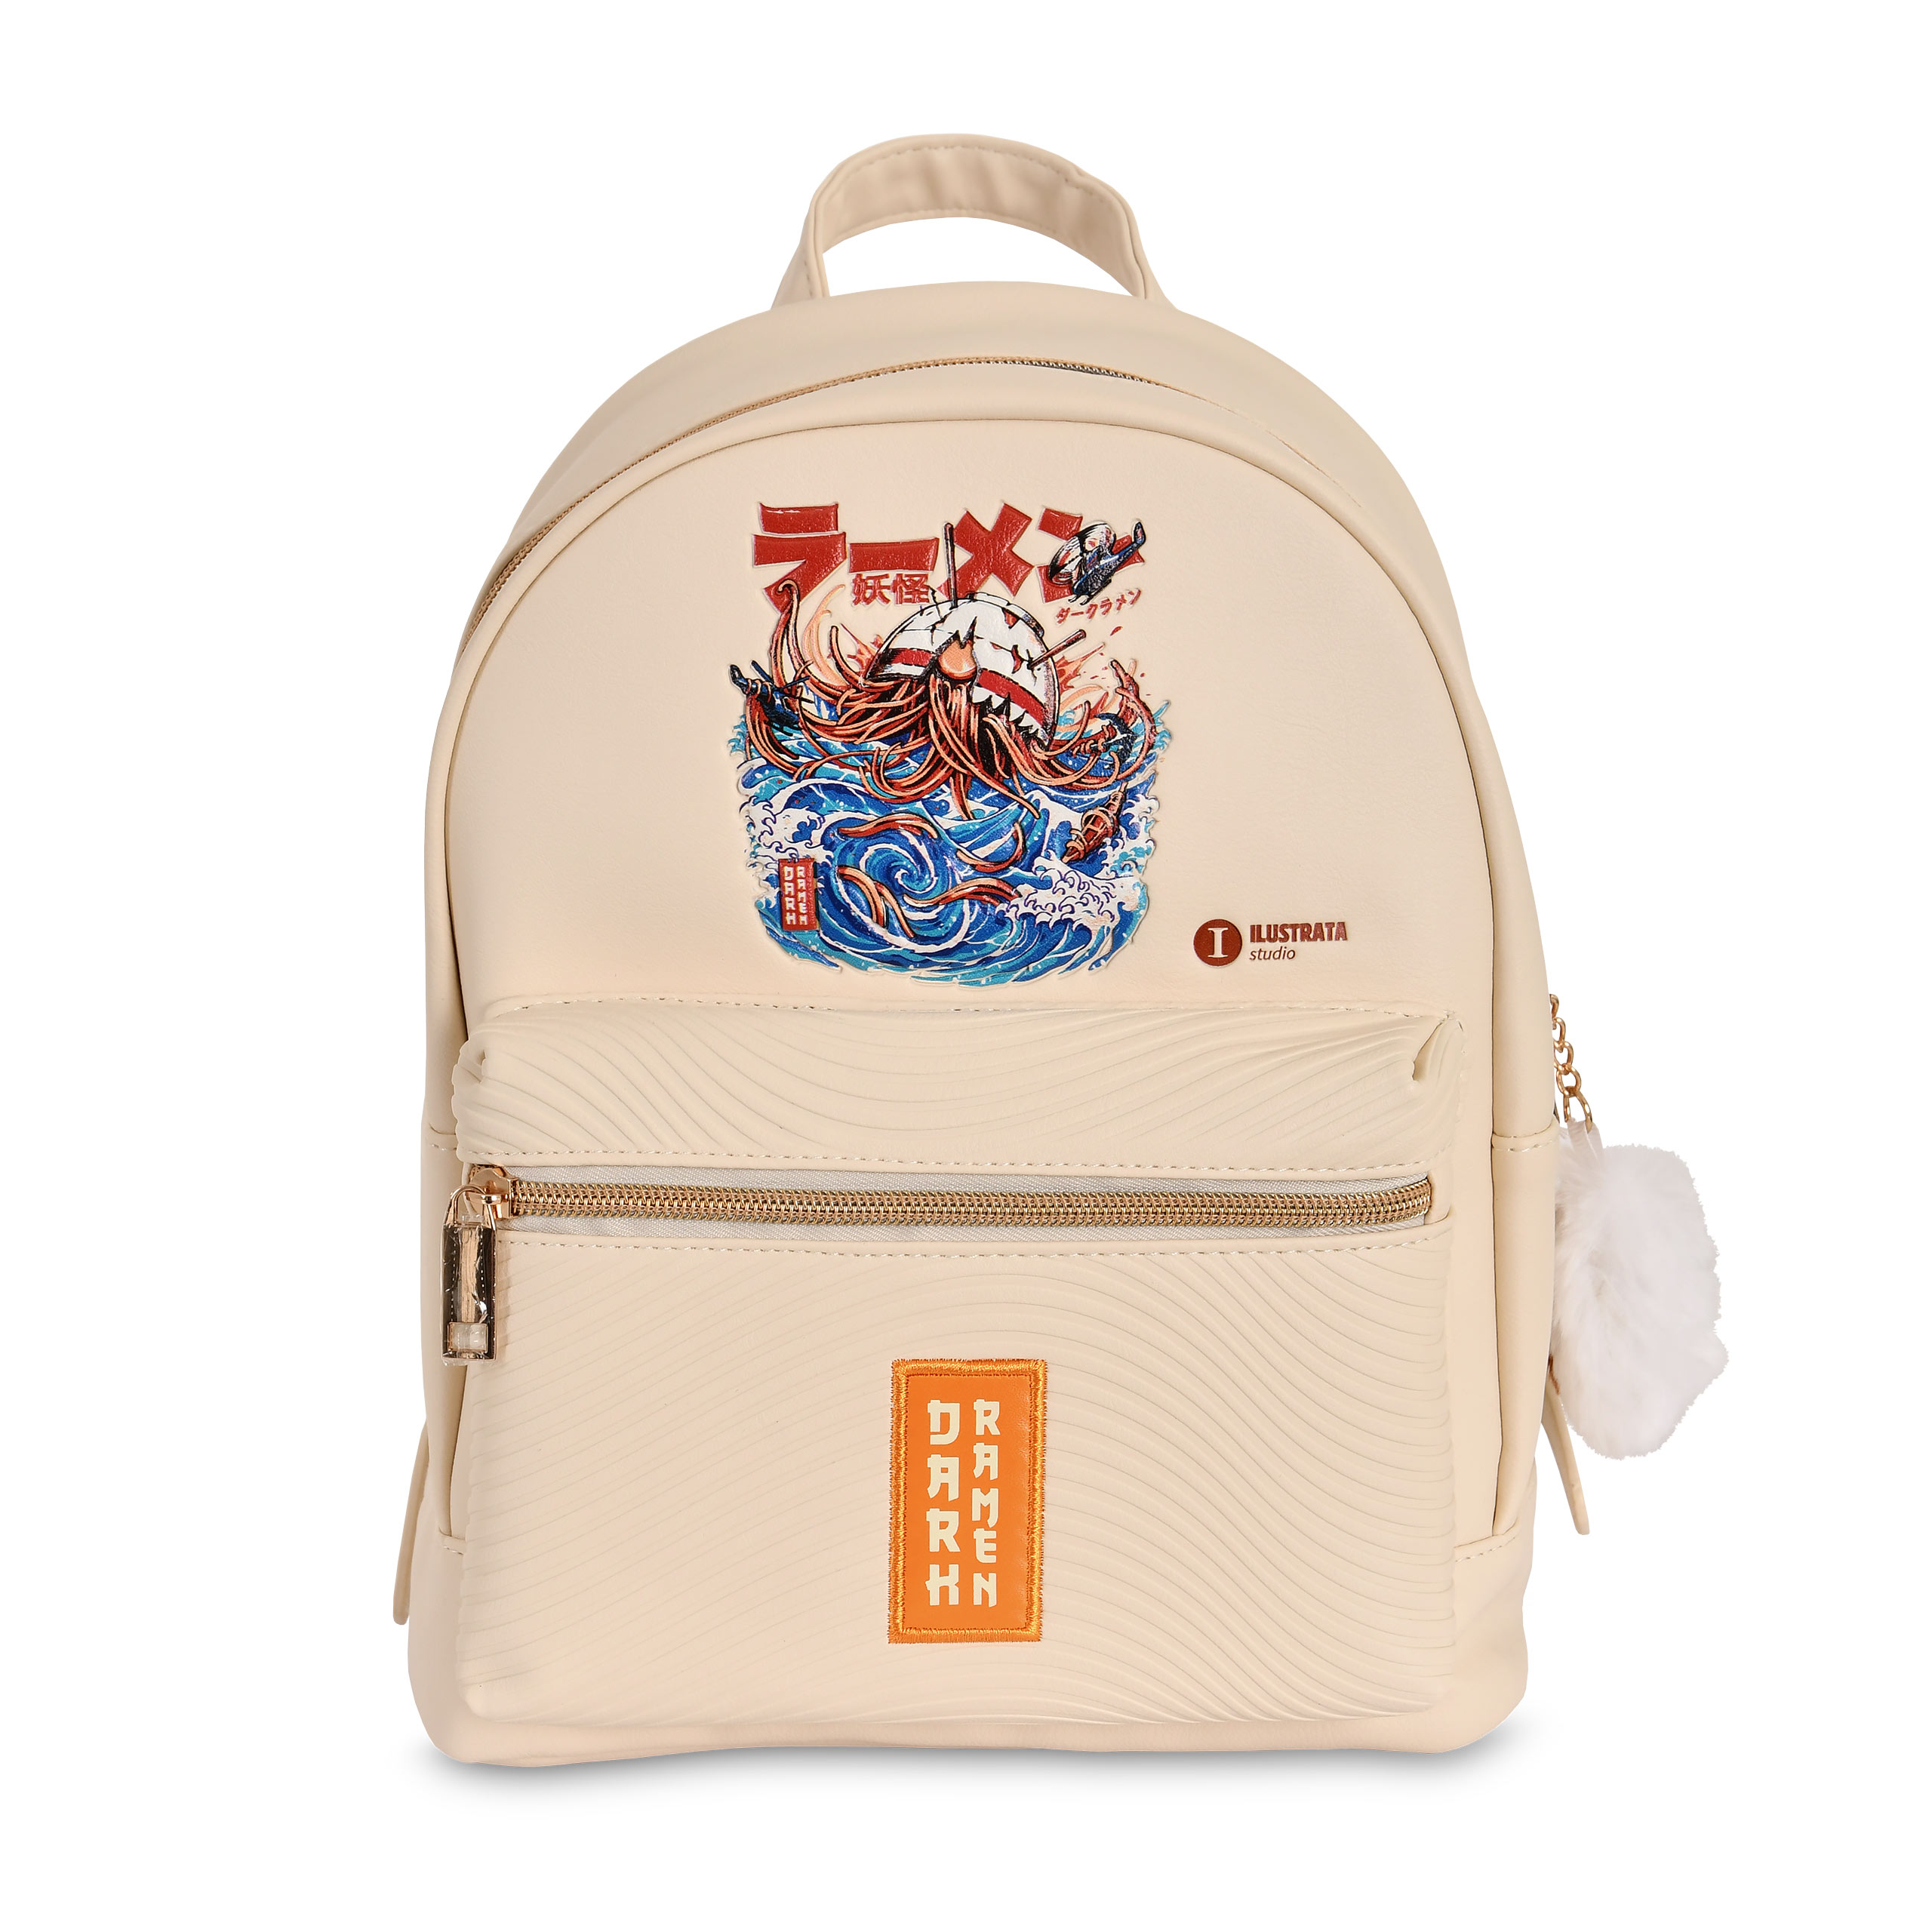 Ilustrata - Dark Ramen Backpack with Pom Pom Pendant beige